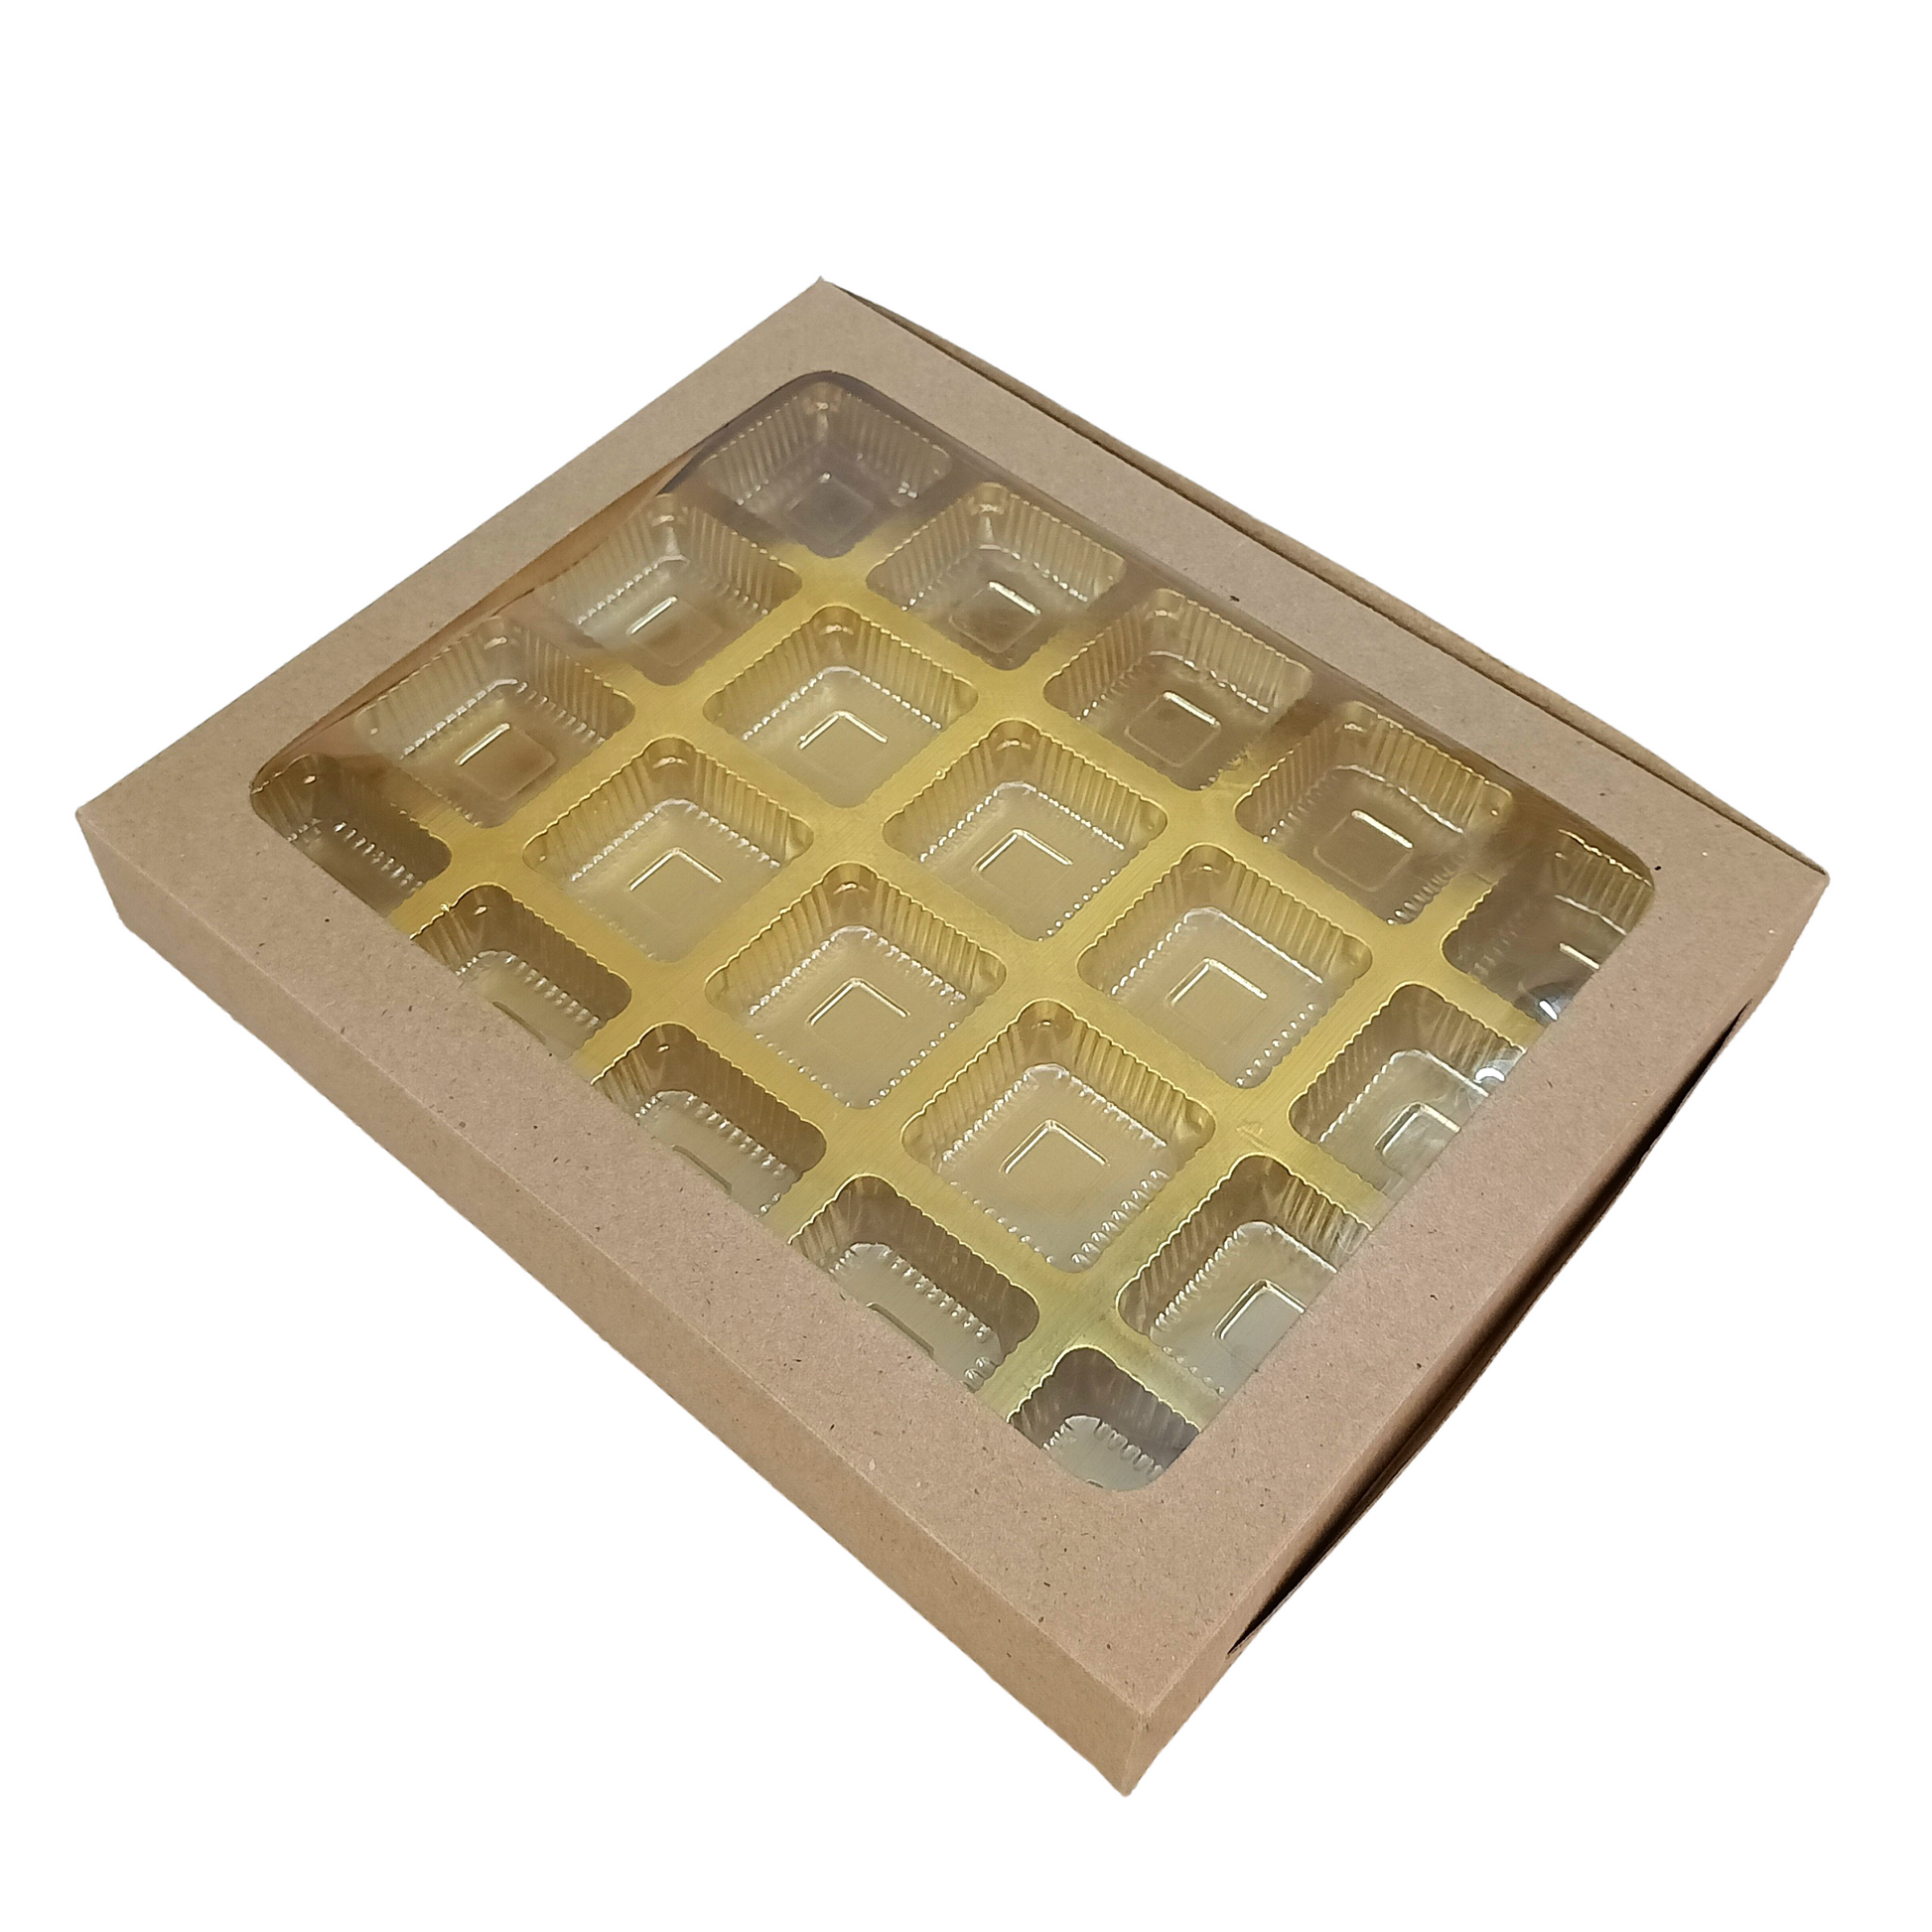 Chocolate Boxes 20 Cavity - 9.5 x 7.5 x 1.25 inches - Kraft Box Royal Box Shop